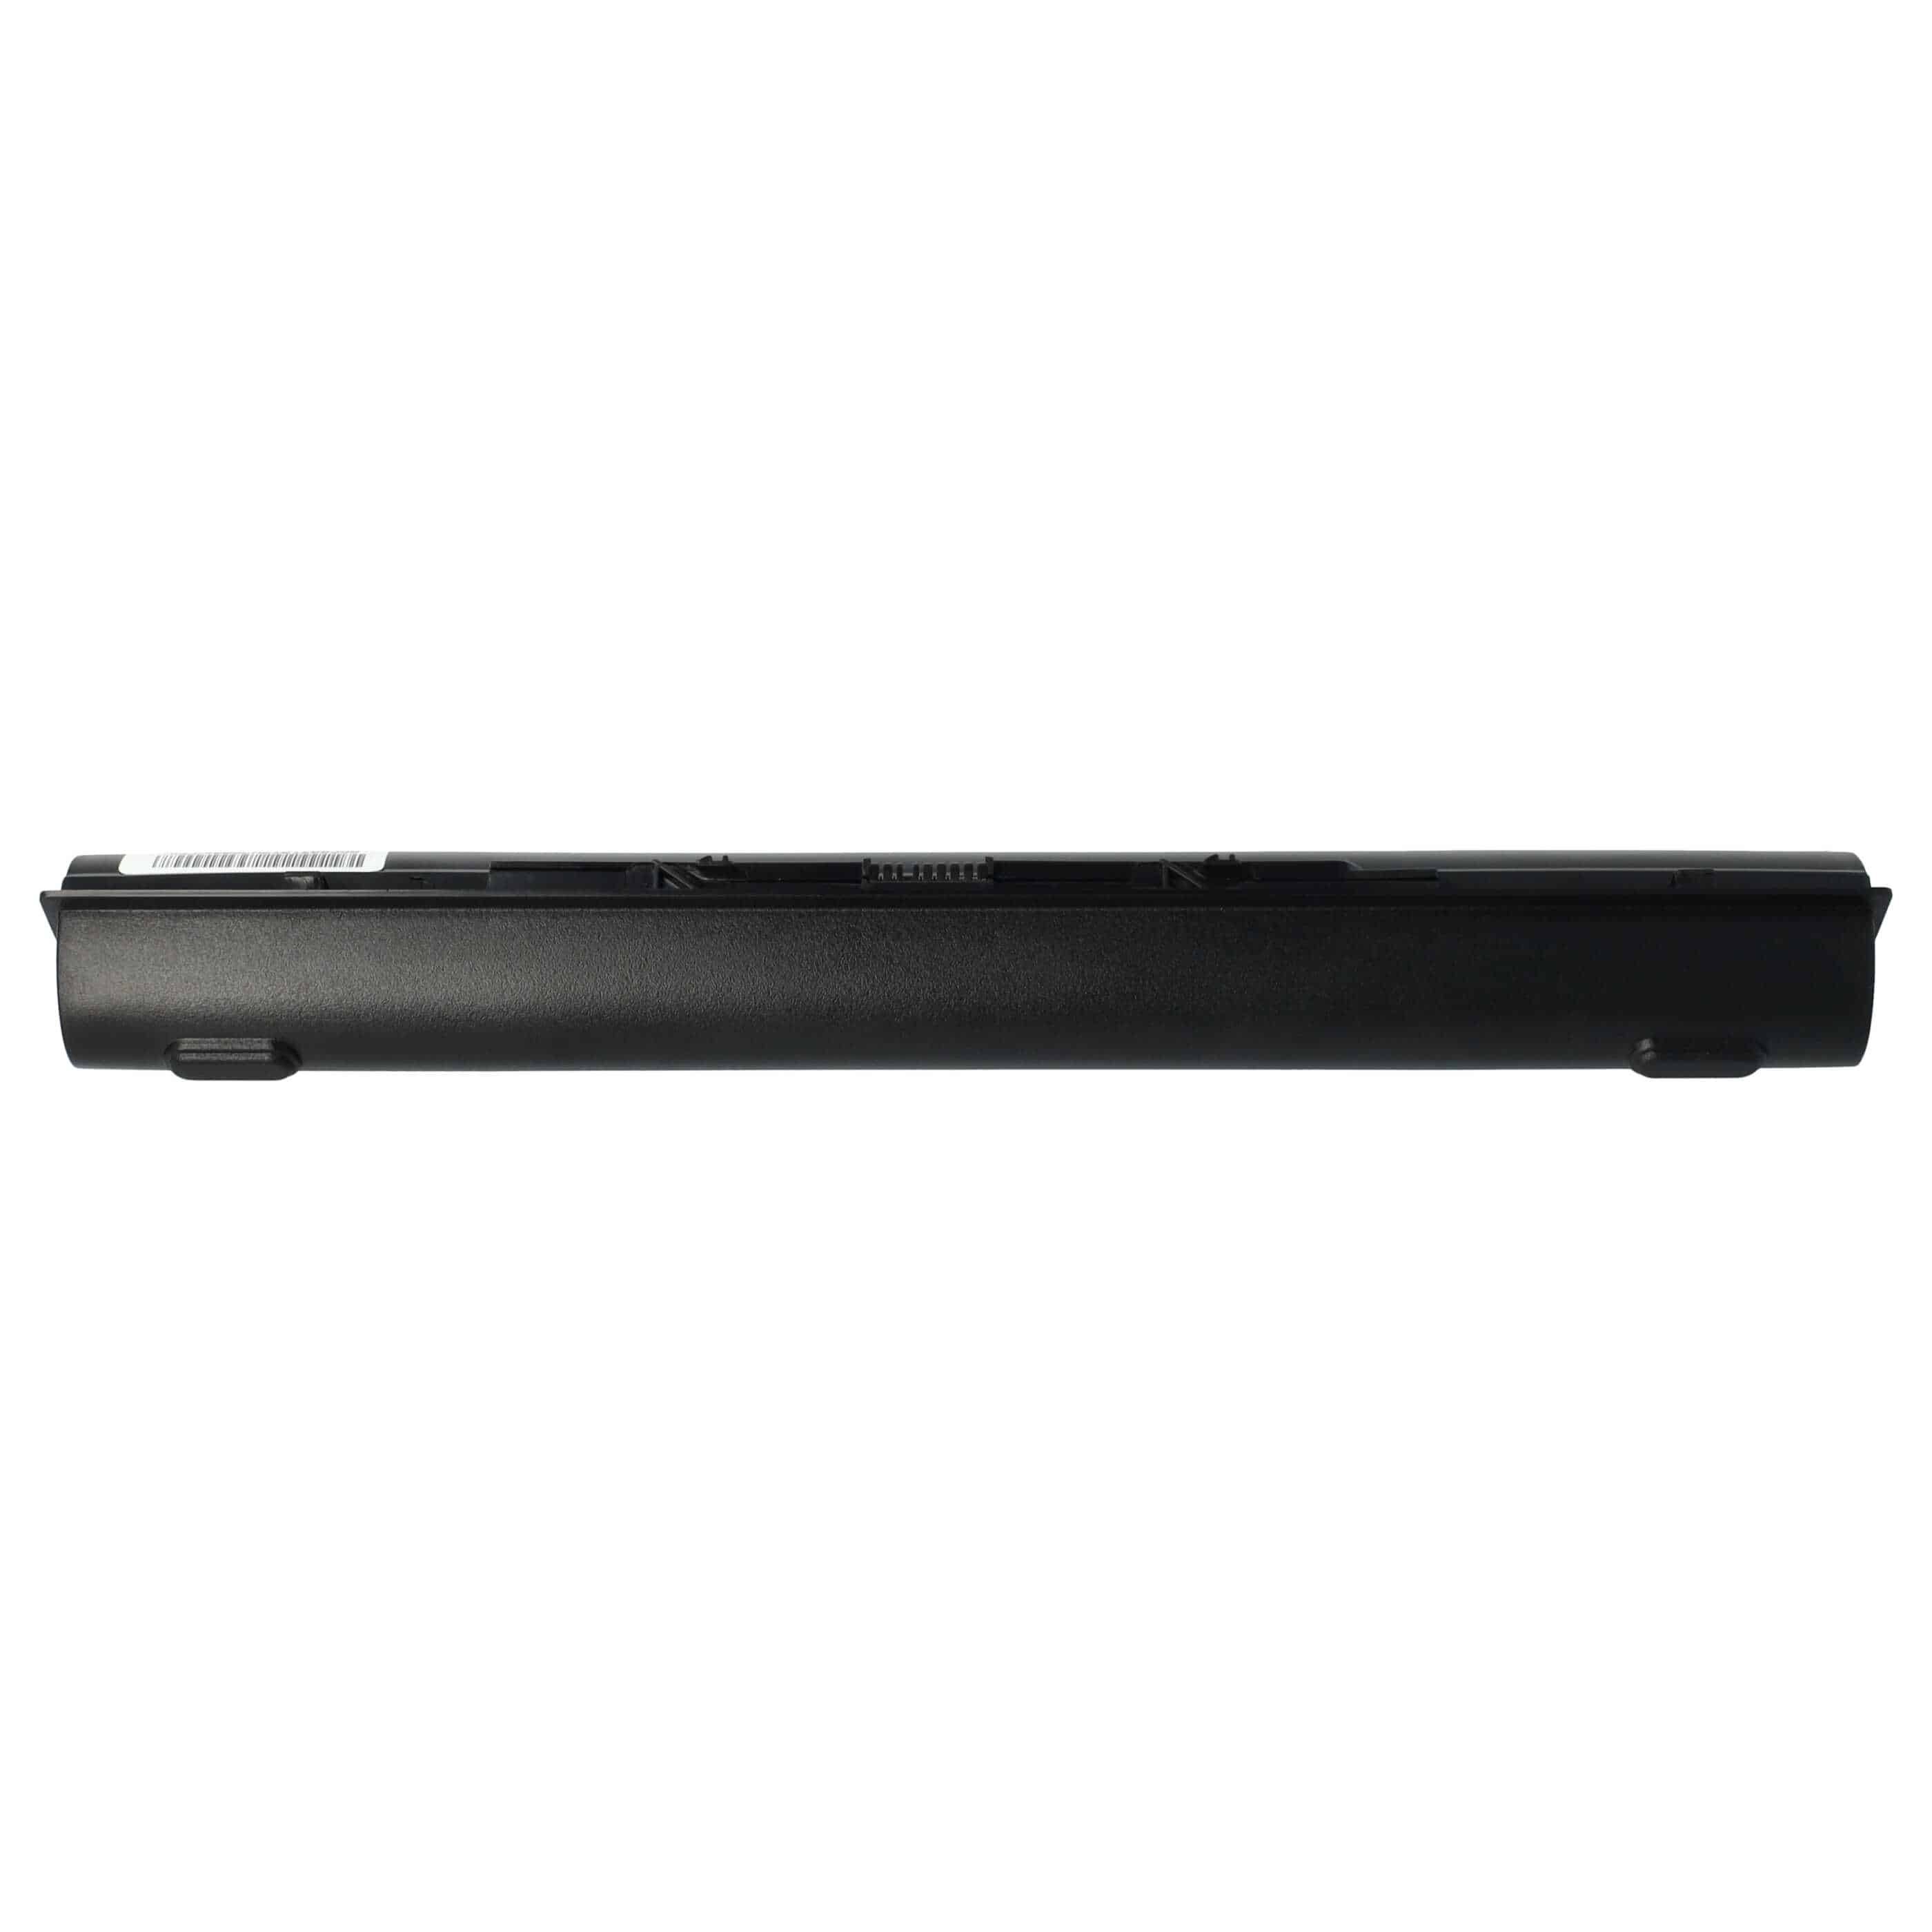 Notebook Battery Replacement for Lenovo 121500171, 121500172, 121500173 - 4400mAh 14.8V Li-Ion, black